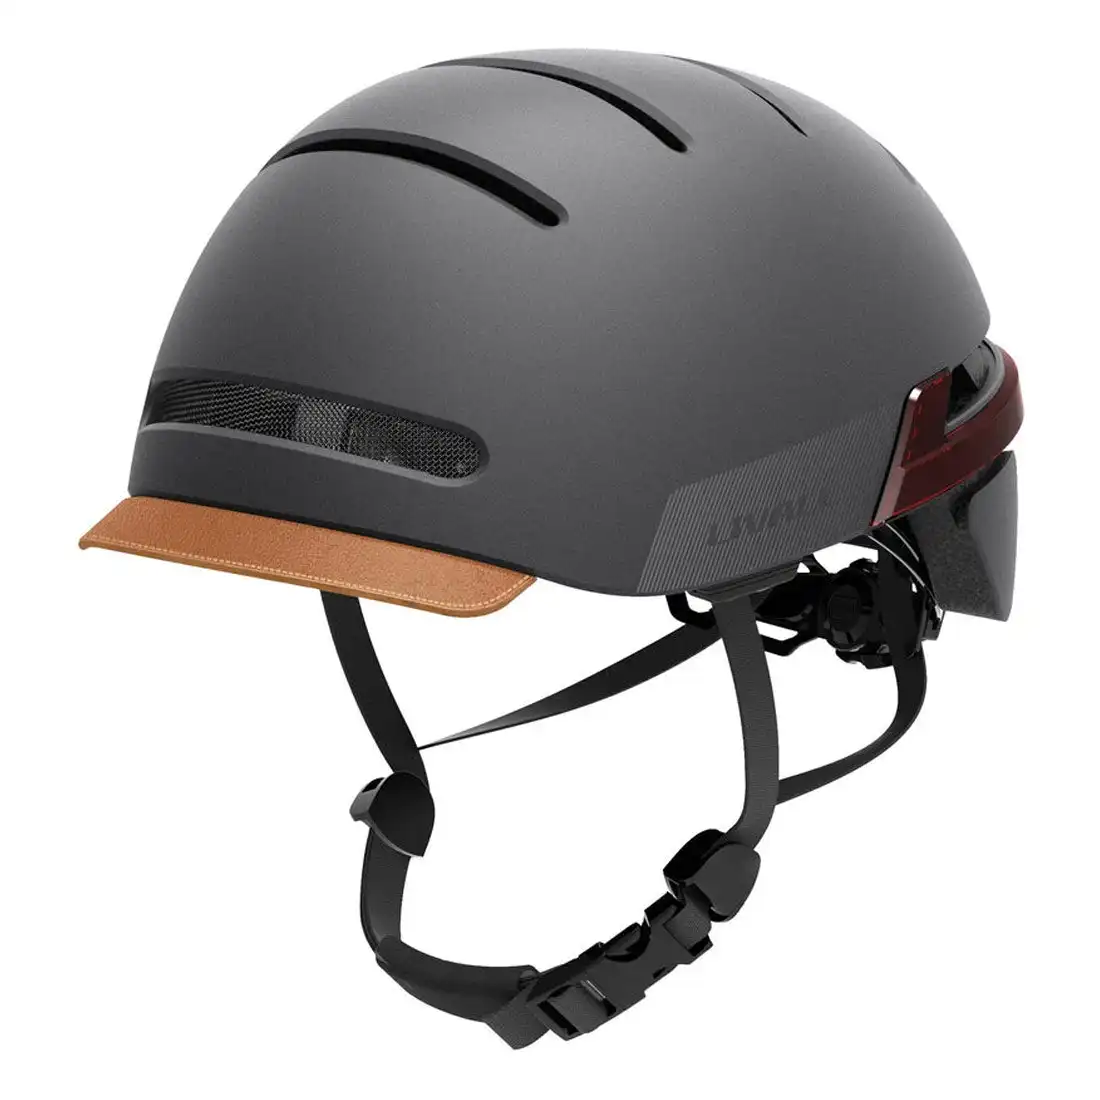 Livall Scooter Helmet BH51T 55-59cm - Graphite Black